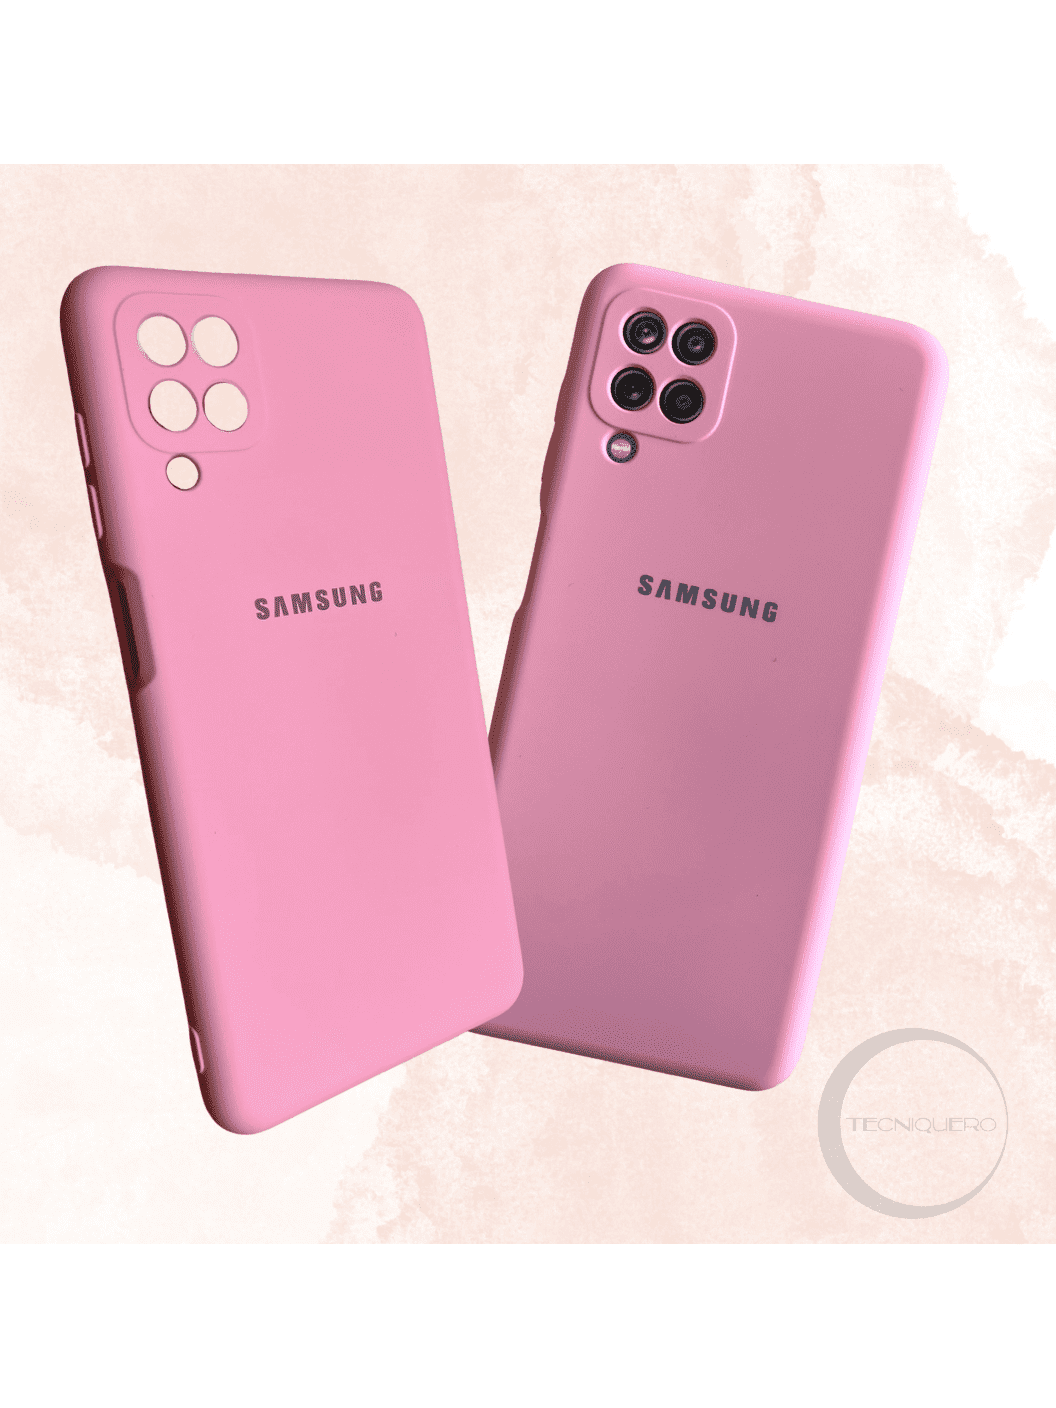 Case Cover Funda para Samsung A12. 10 piezas, Colores Surtidos - Tecniquero